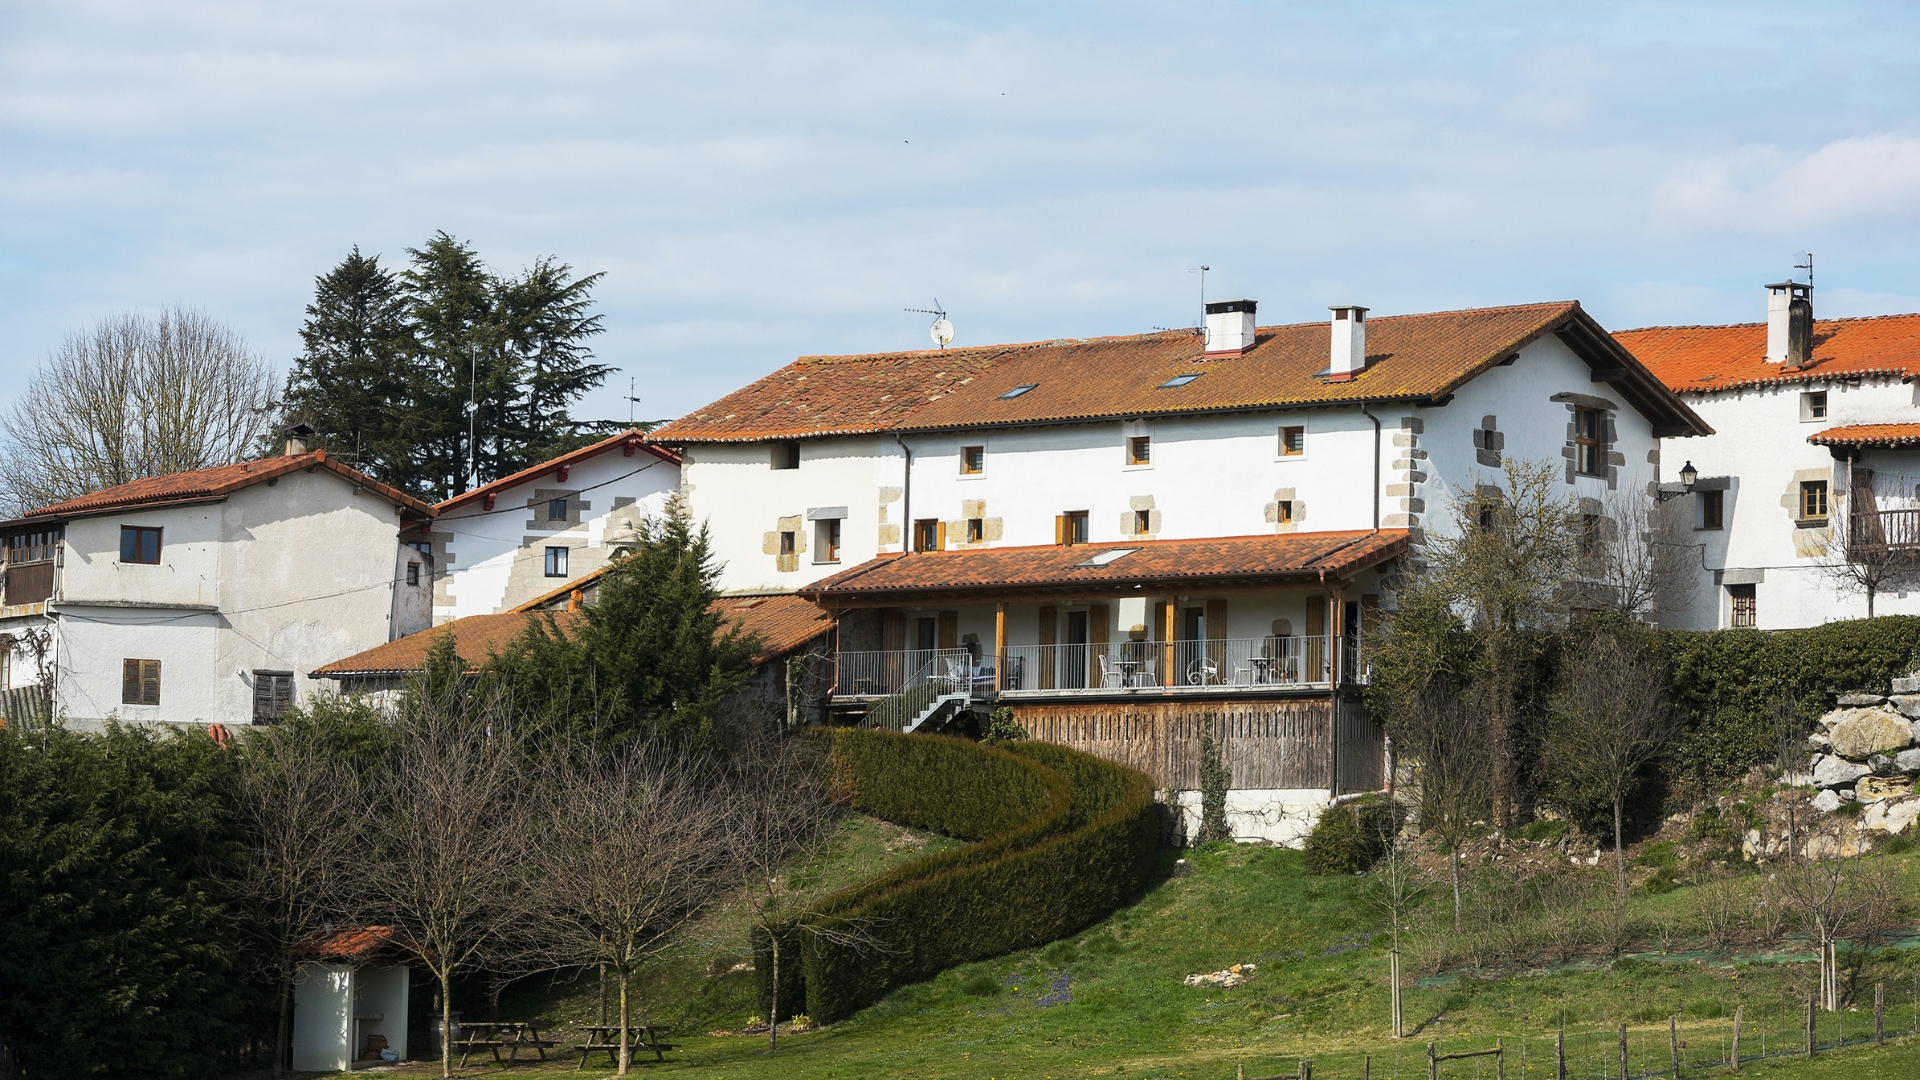 Hoteles rurales en Navarra